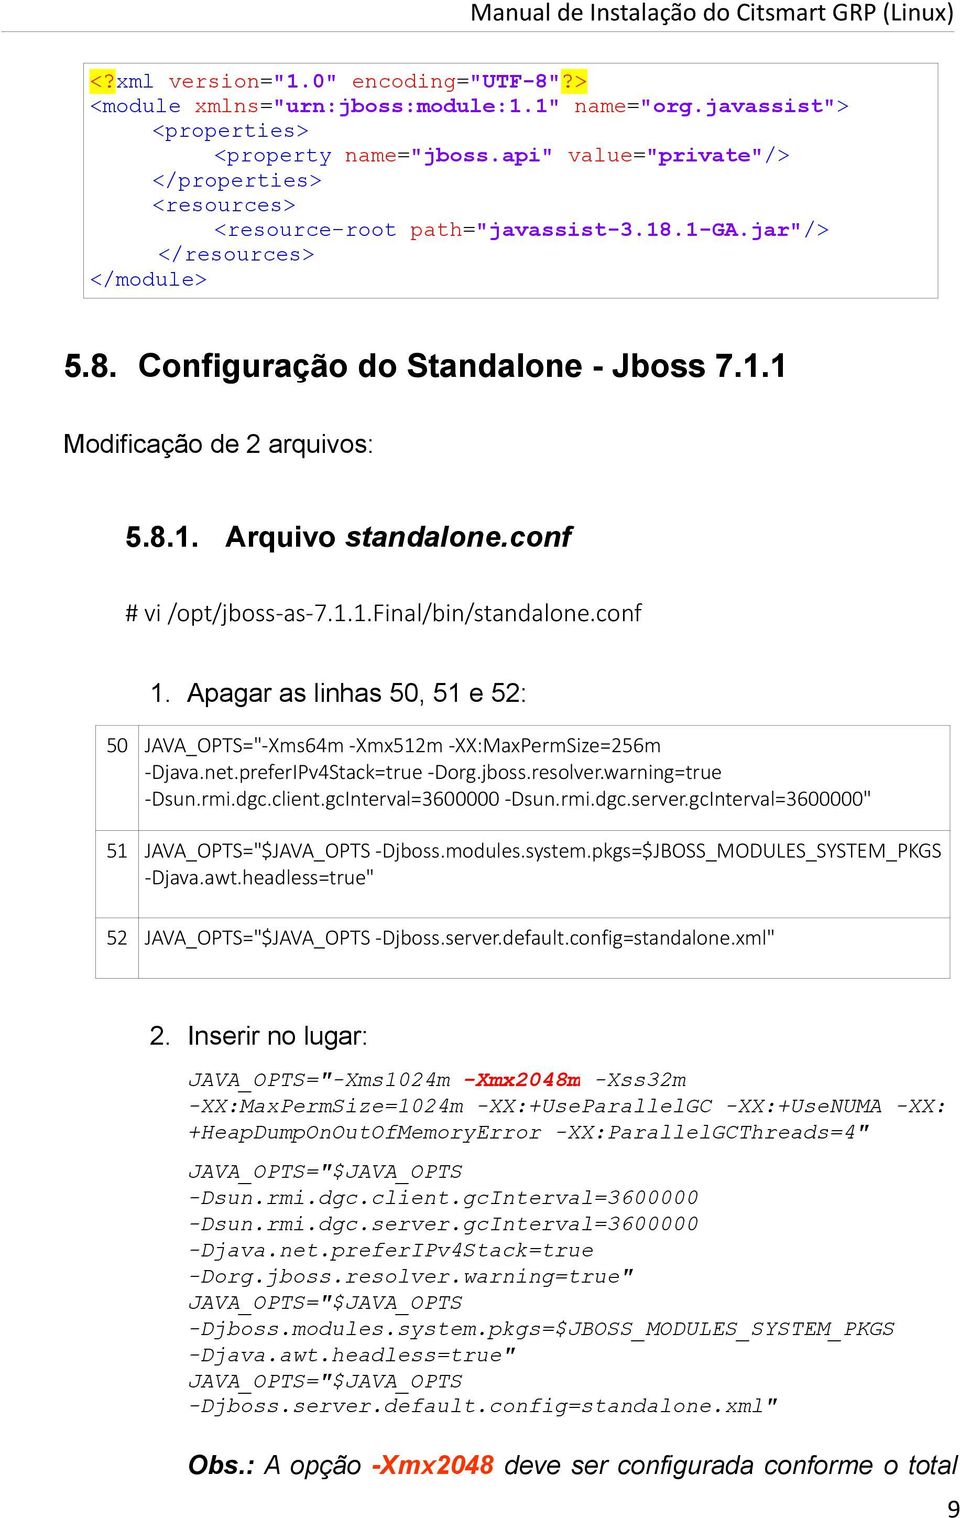 conf # vi /opt/jboss-as-7.1.1.final/bin/standalone.conf 1. Apagar as linhas 50, 51 e 52: 50 JAVA_OPTS="-Xms64m -Xmx512m -XX:MaxPermSize=256m -Djava.net.preferIPv4Stack=true -Dorg.jboss.resolver.